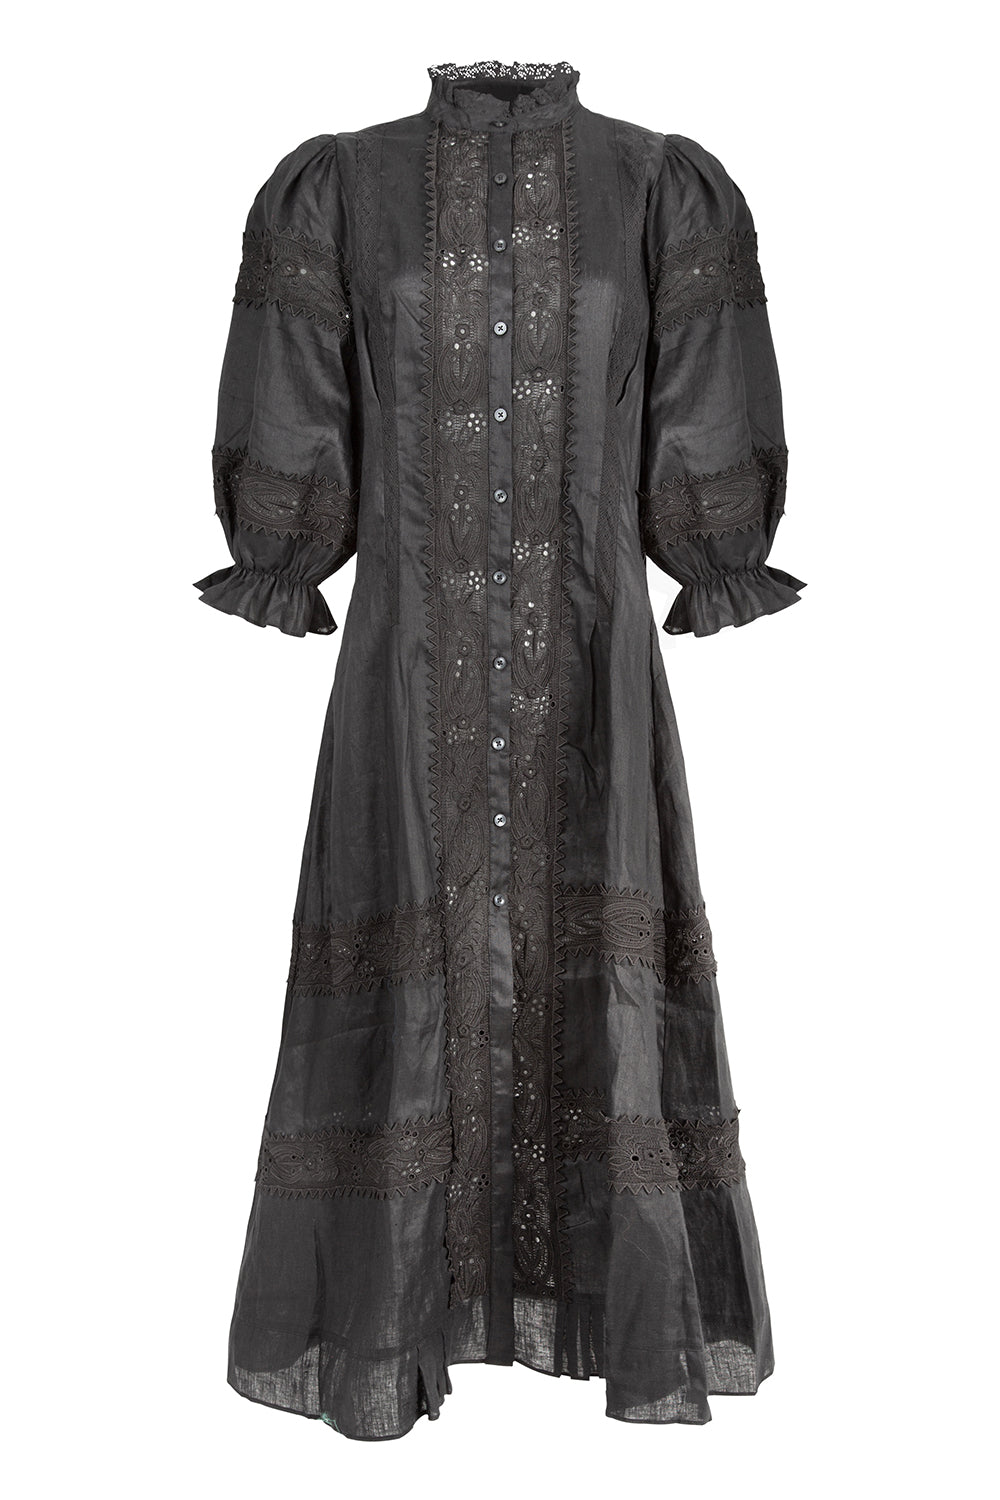 Coop Lace Value Dress Black